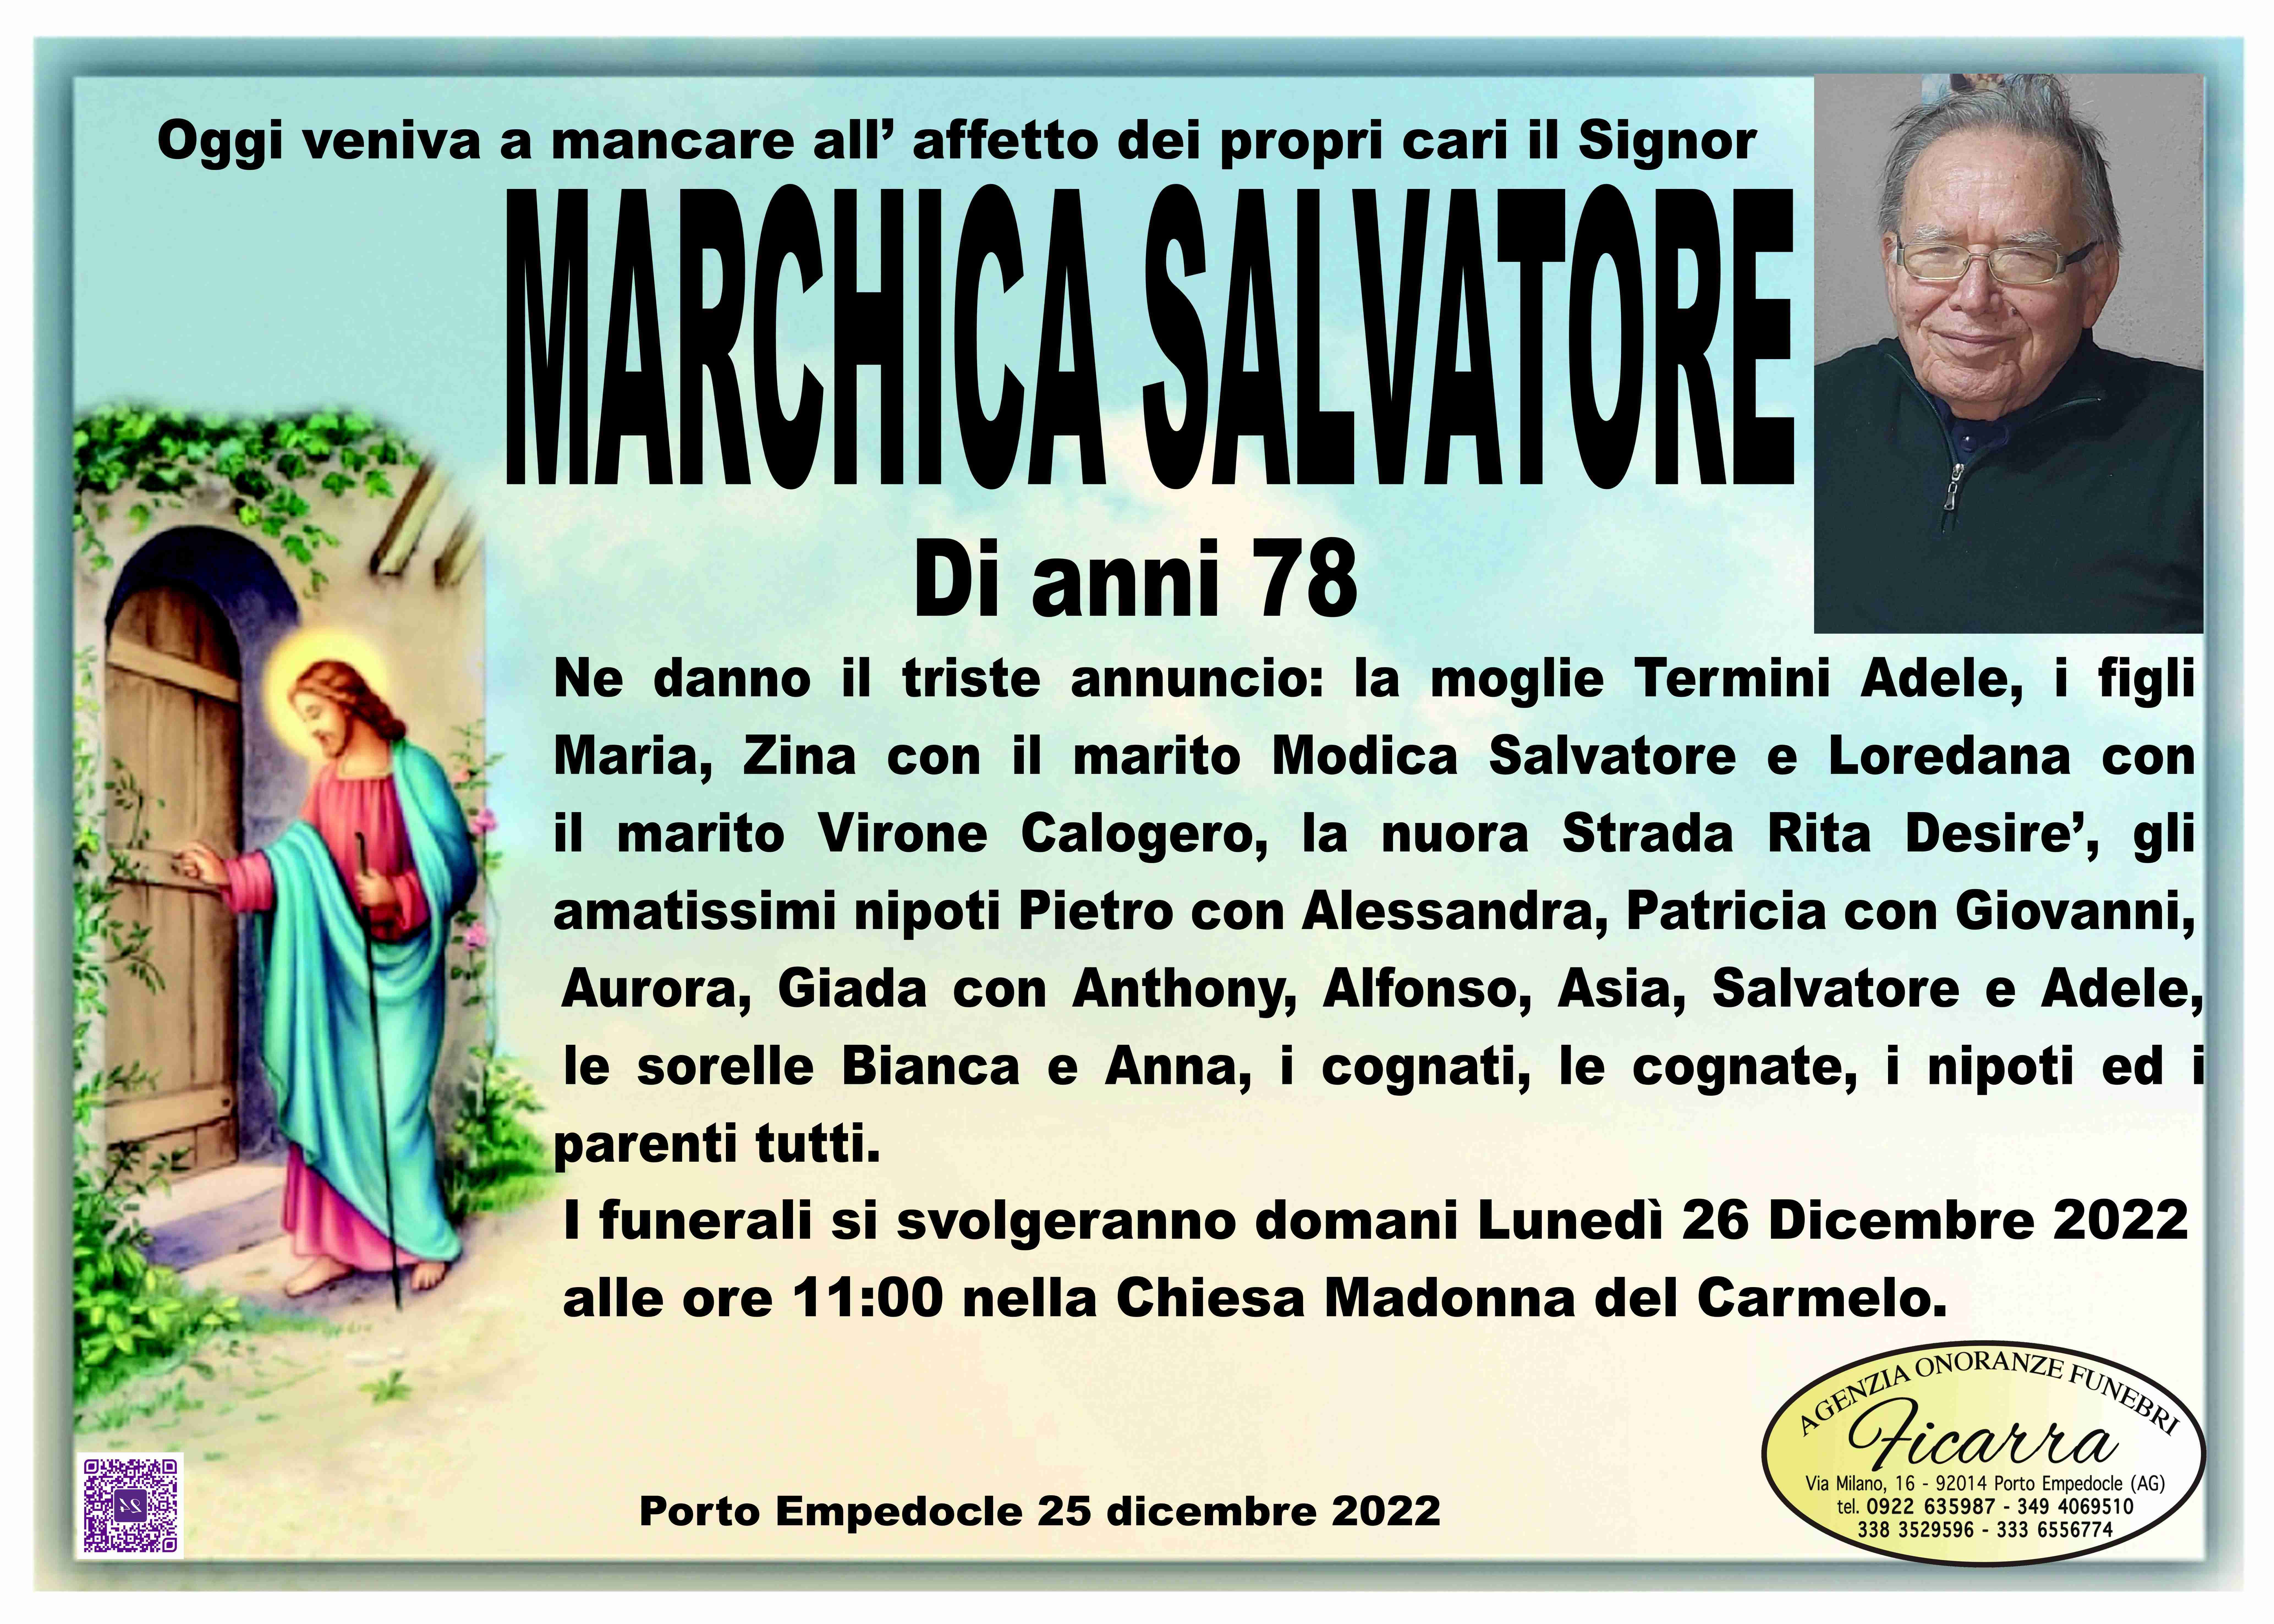 Salvatore Marchica